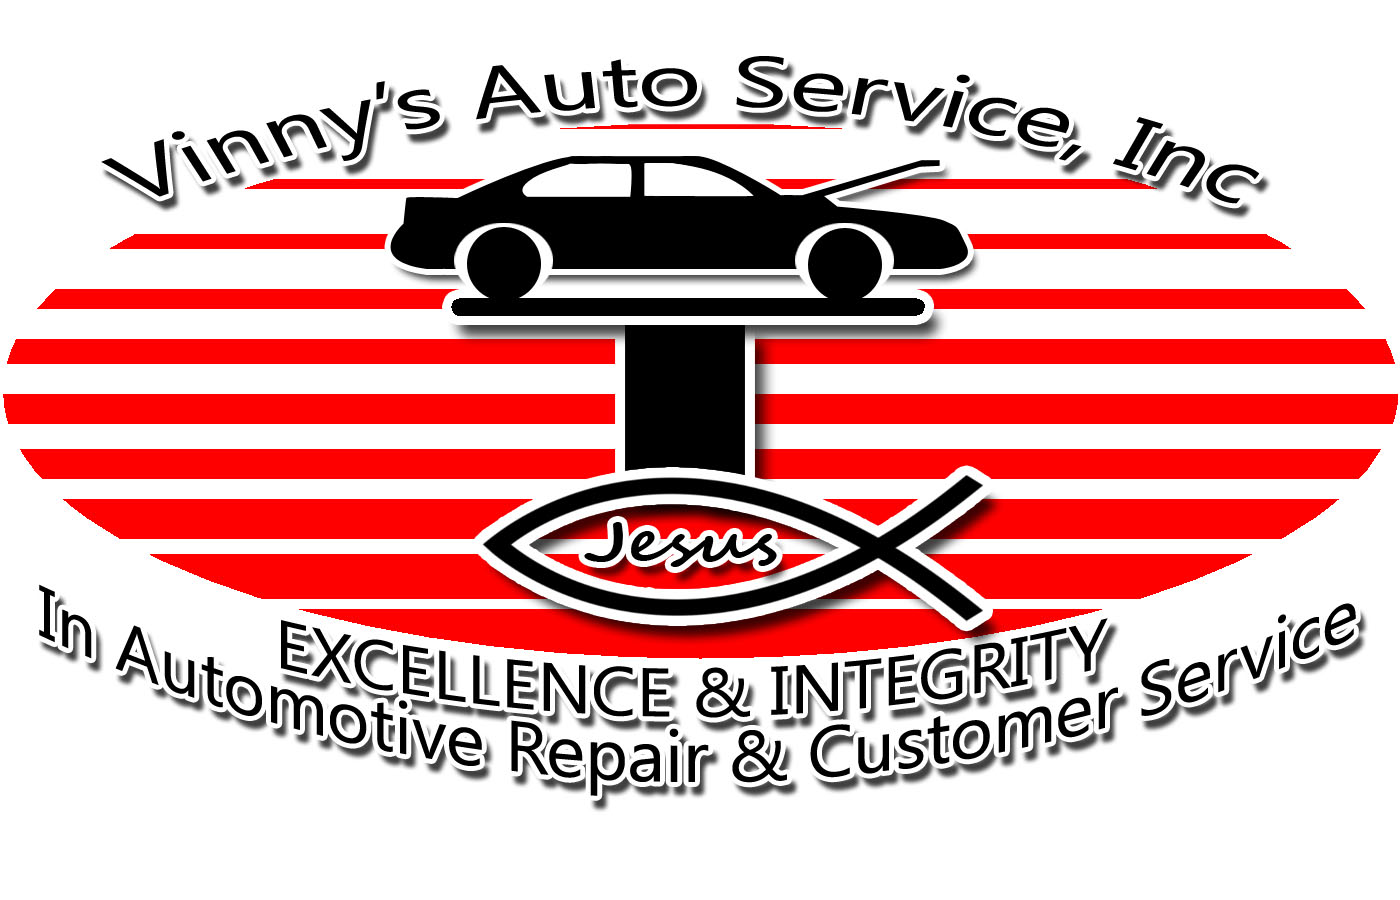 Vinny's Auto Service, Inc.